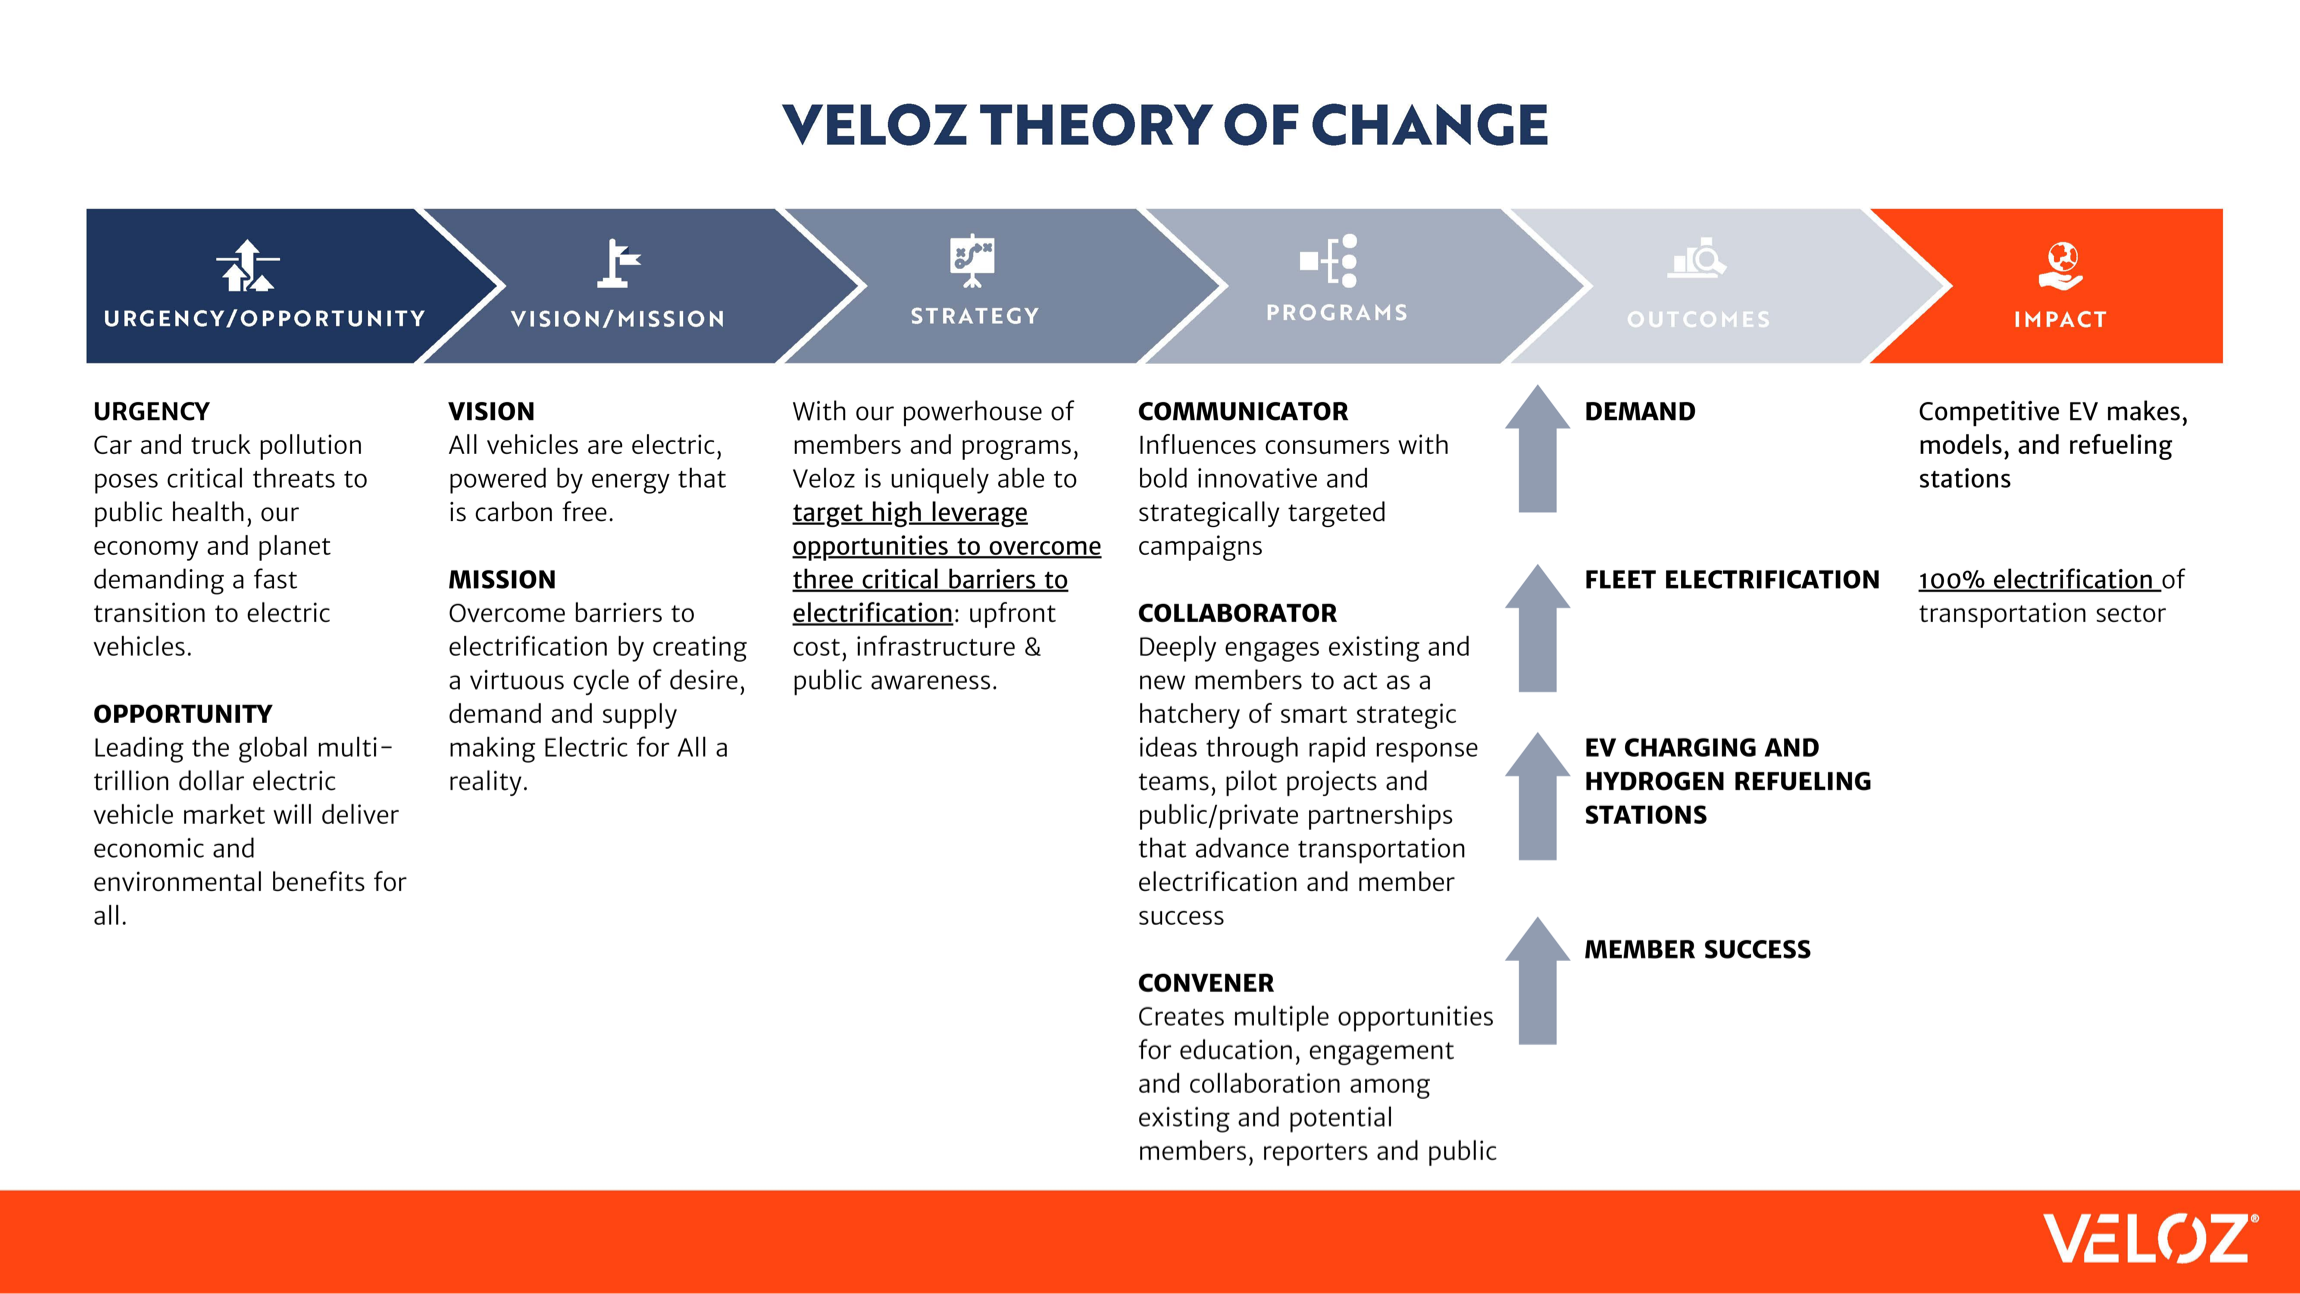 theory of change